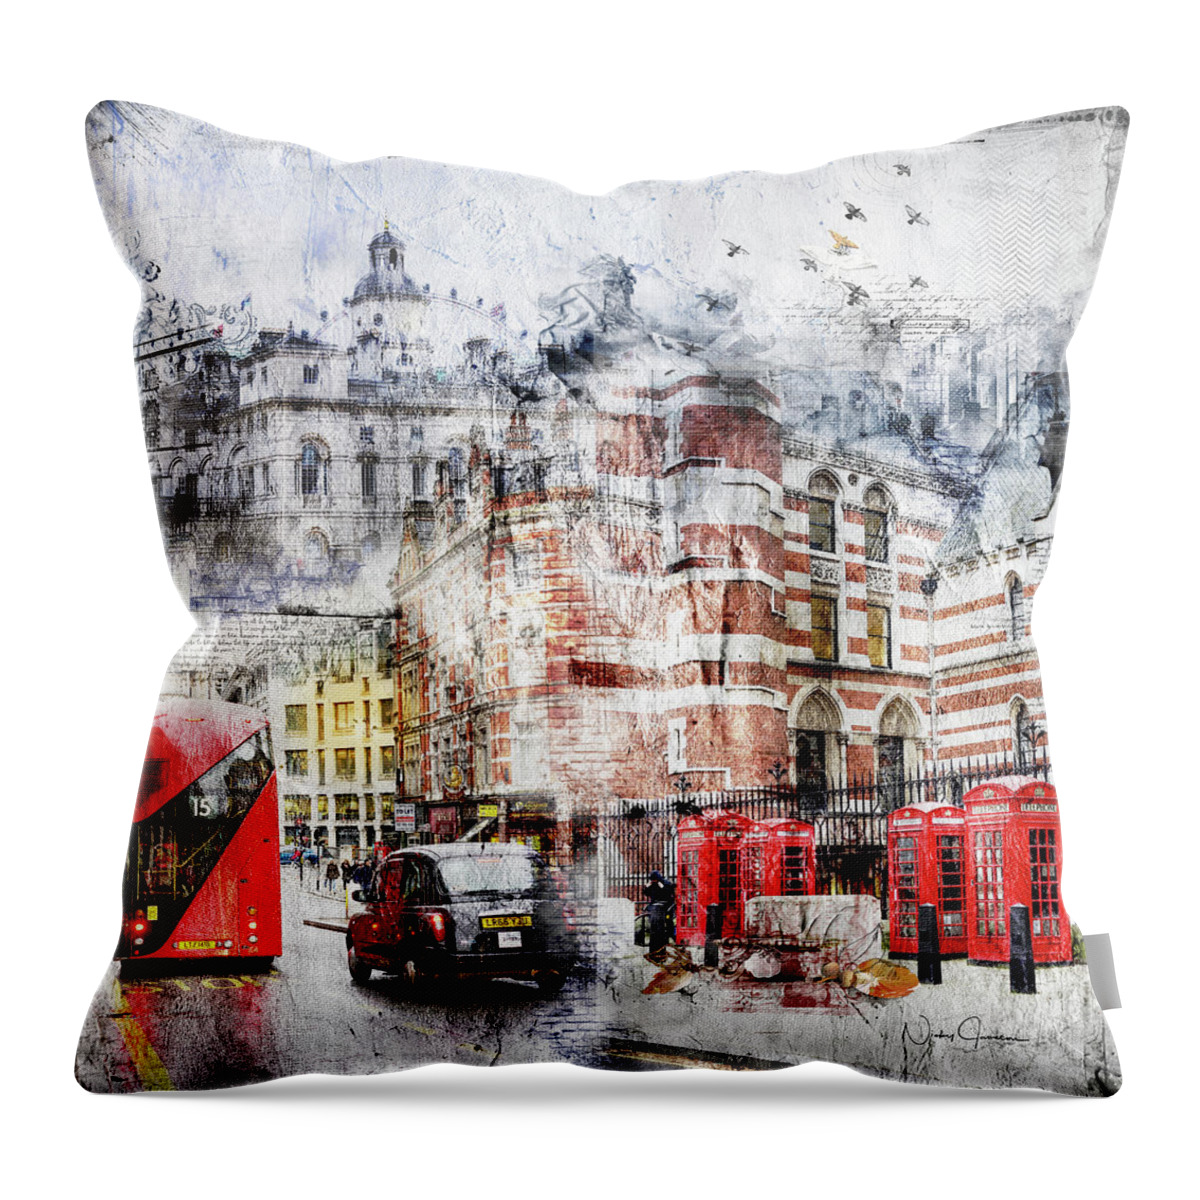 Londonart Throw Pillow featuring the digital art Carey Street by Nicky Jameson